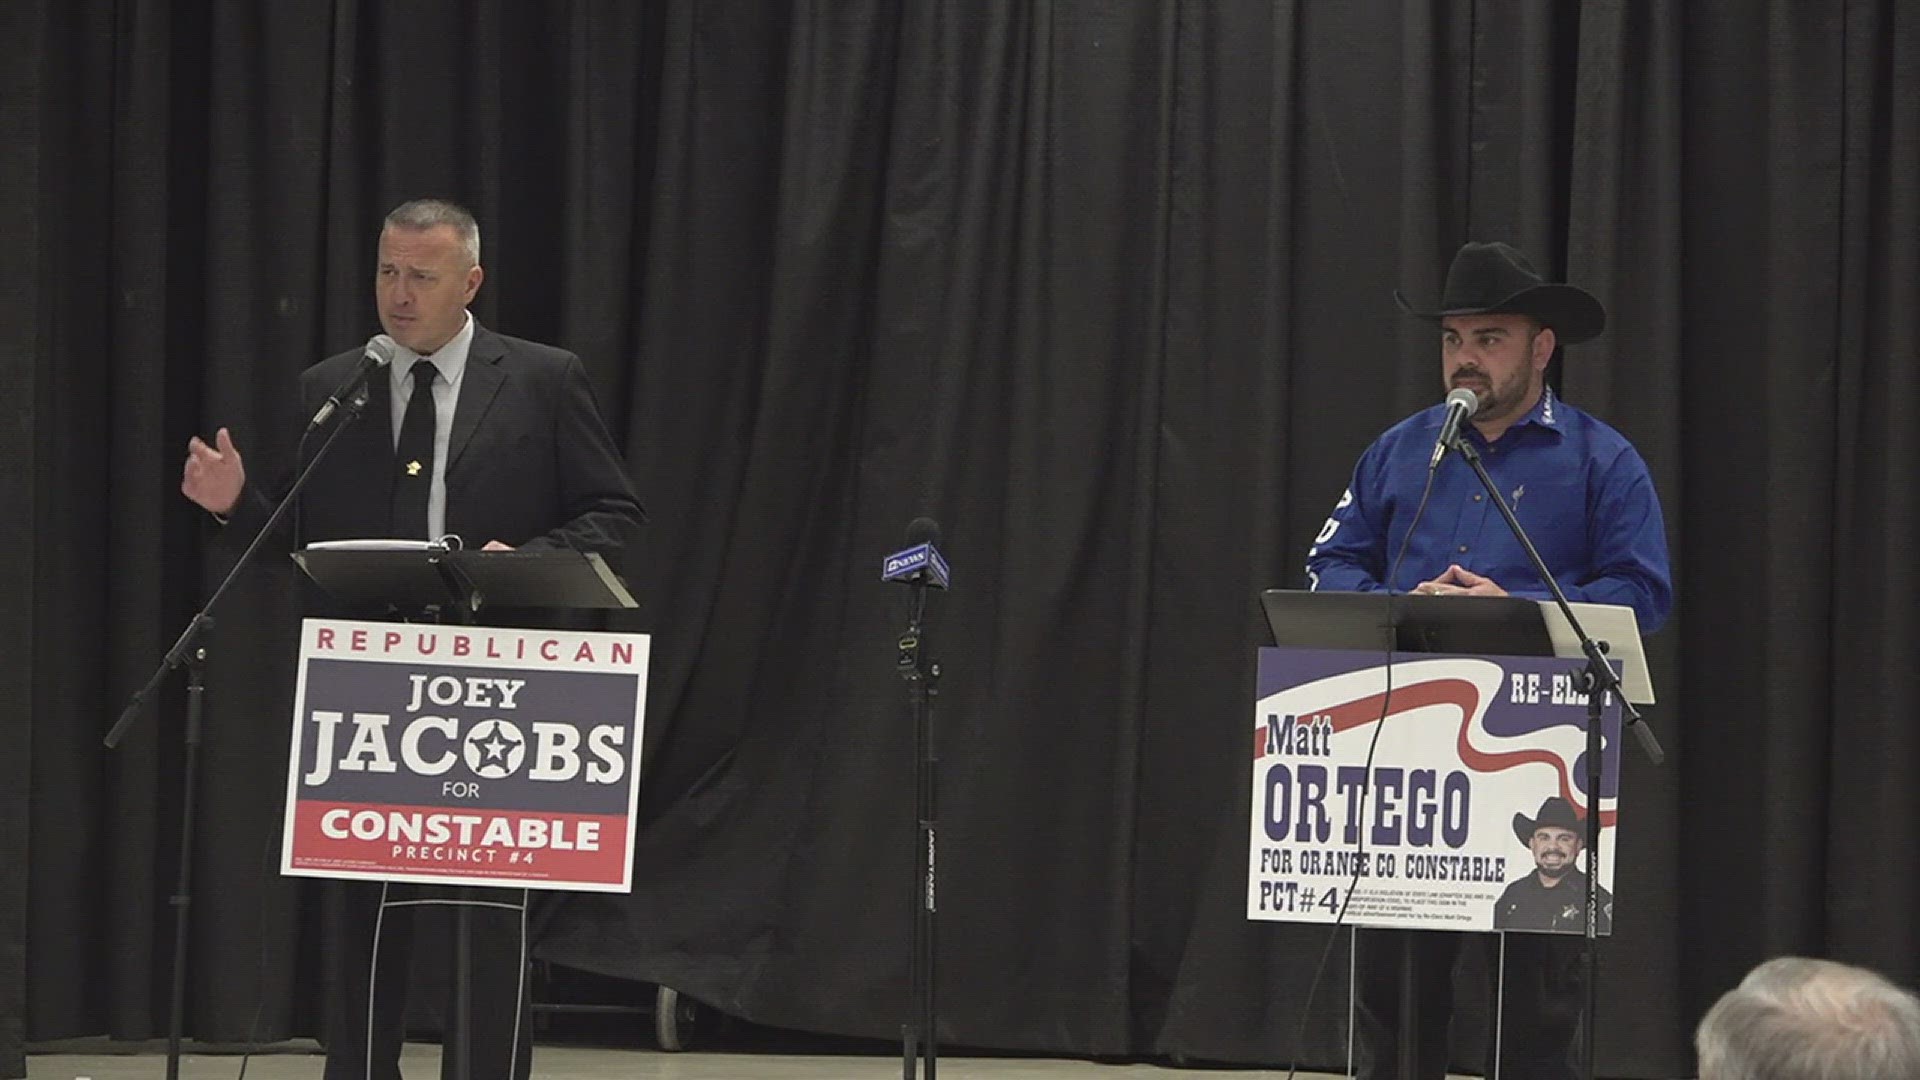 Orange County Constable Matt Ortego is defending his seat against challenger Orange County Sheriff's Office's Captain Joey Jacobs.